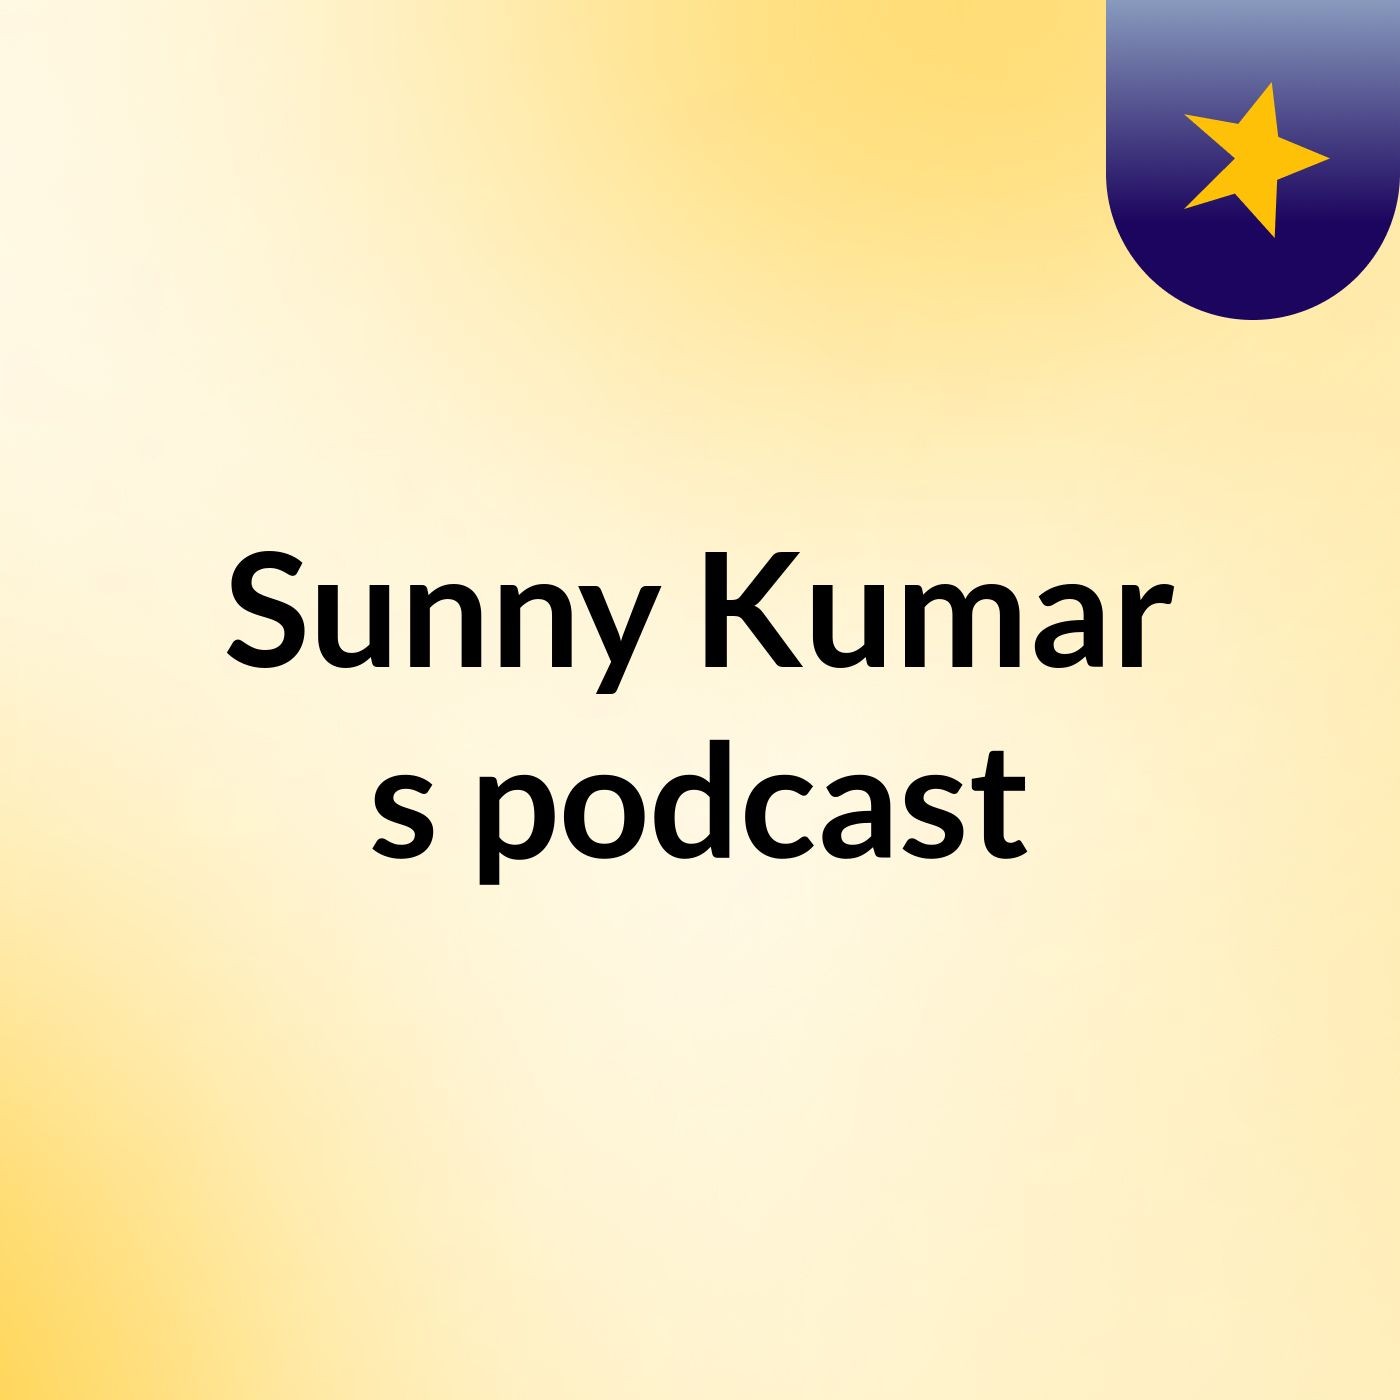 Episode 3 - Sunny Kumar's podcast